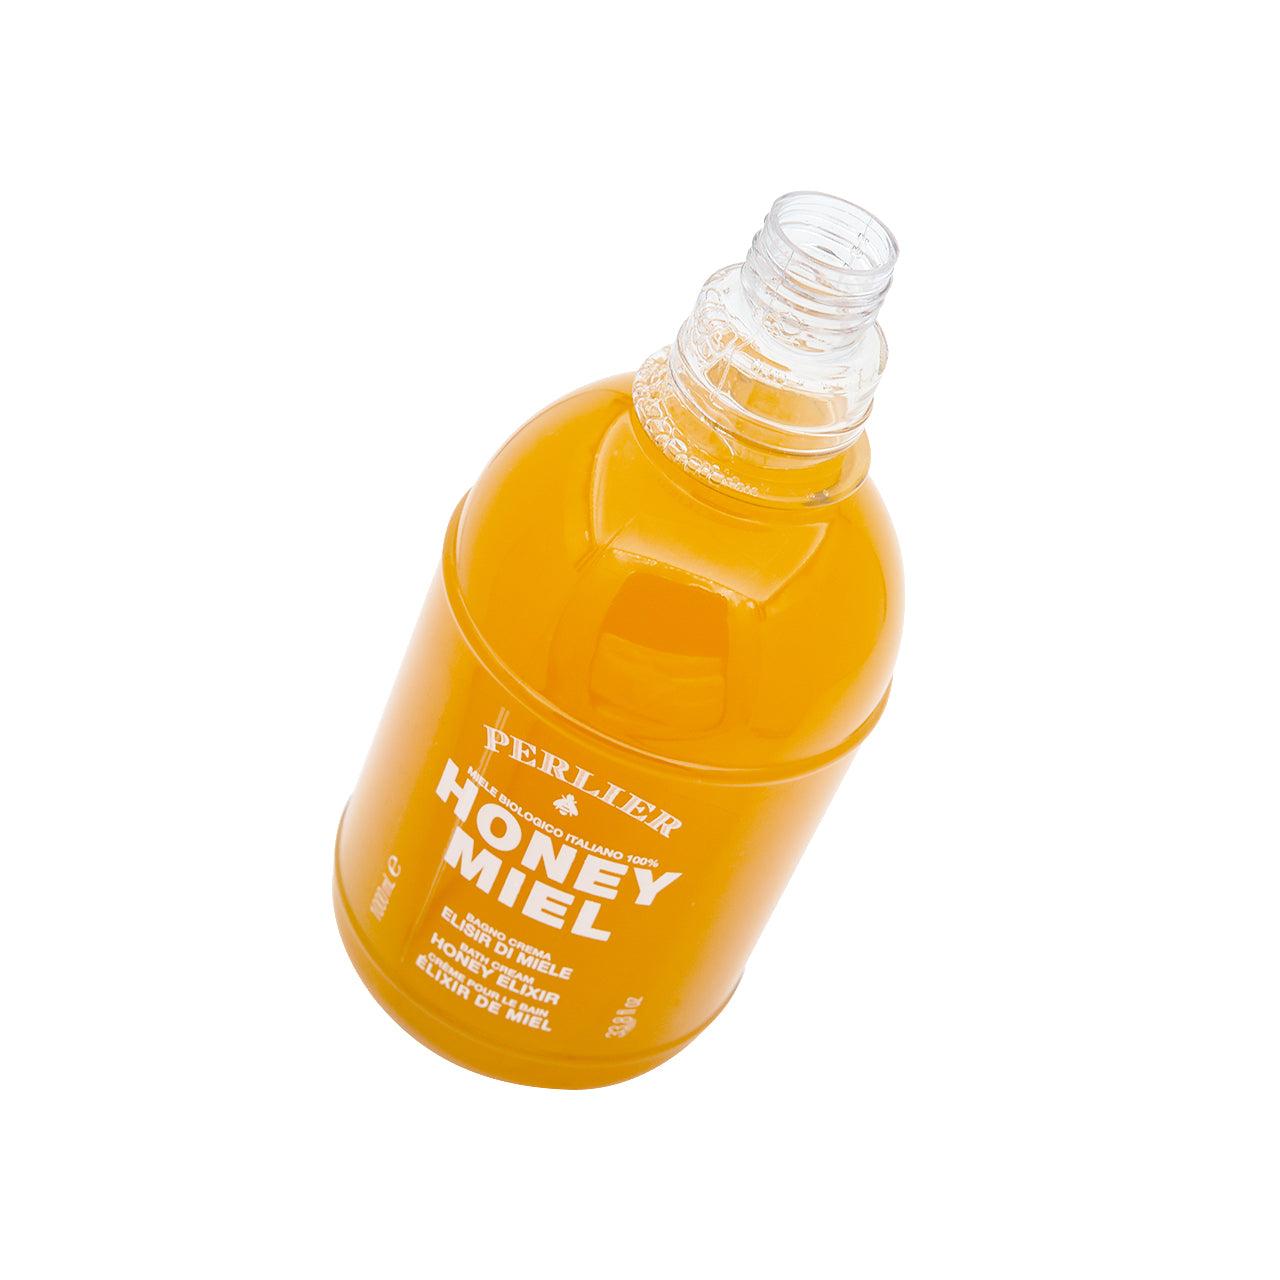 Perlier Honey Miel Bath & Shower Cream 1000ml | Sasa Global eShop